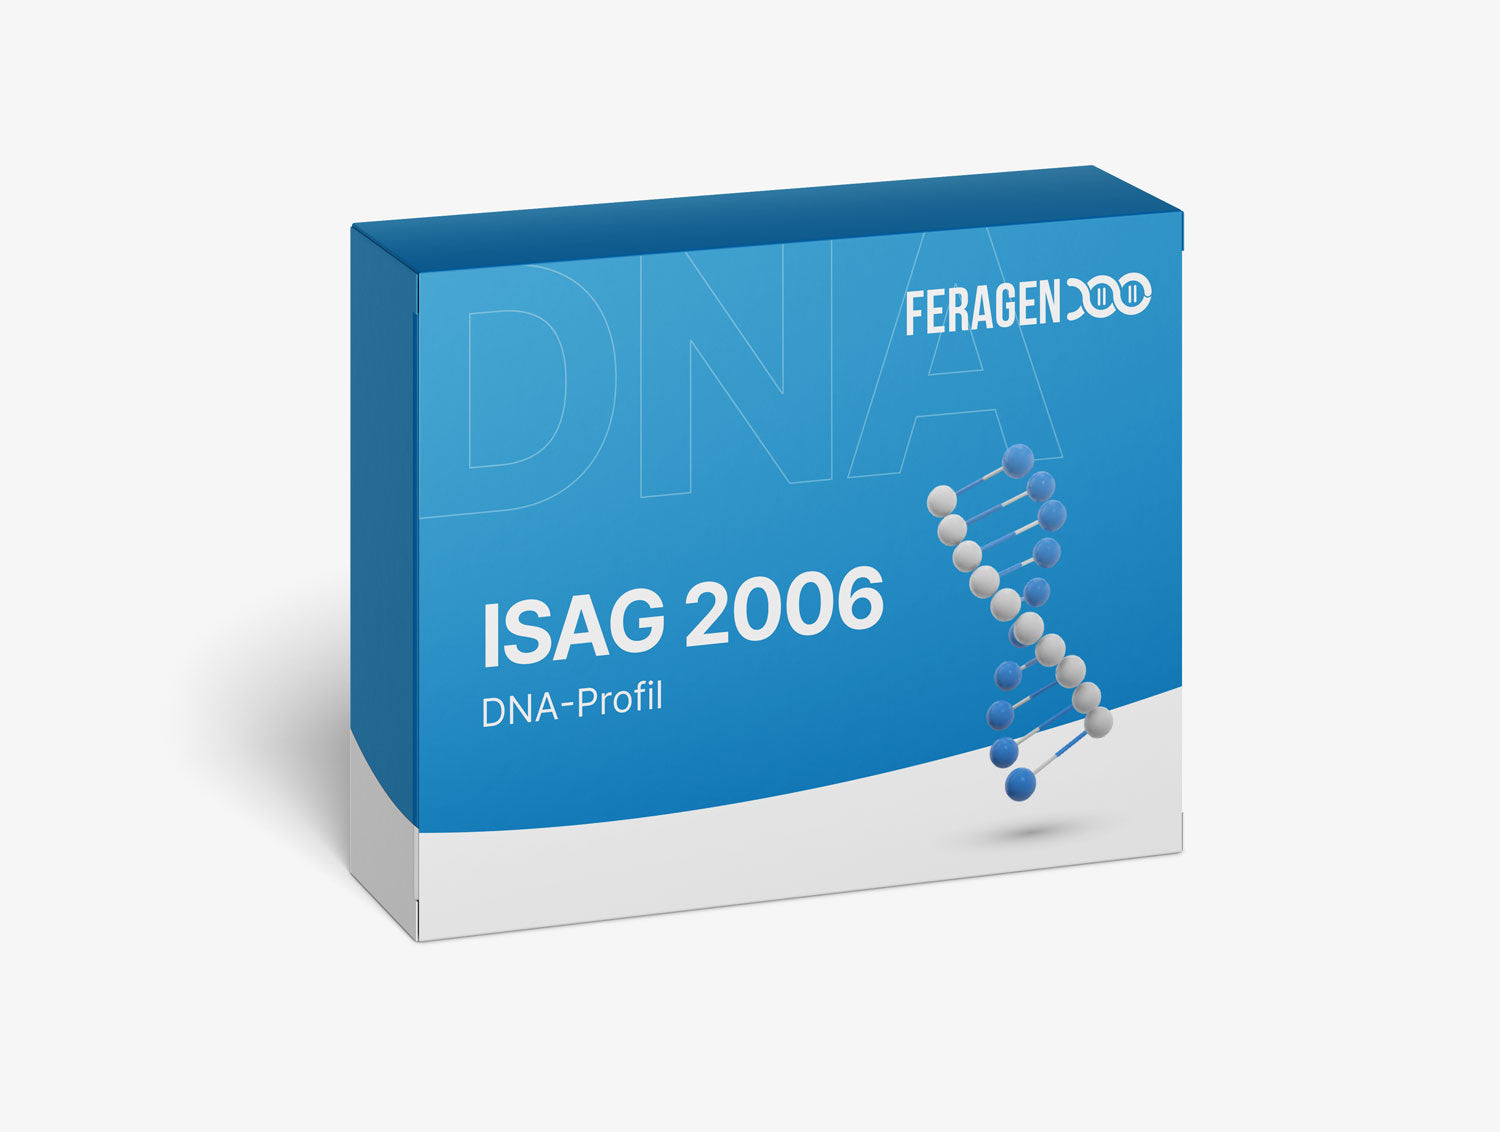 DNA-Profil (ISAG 2006)